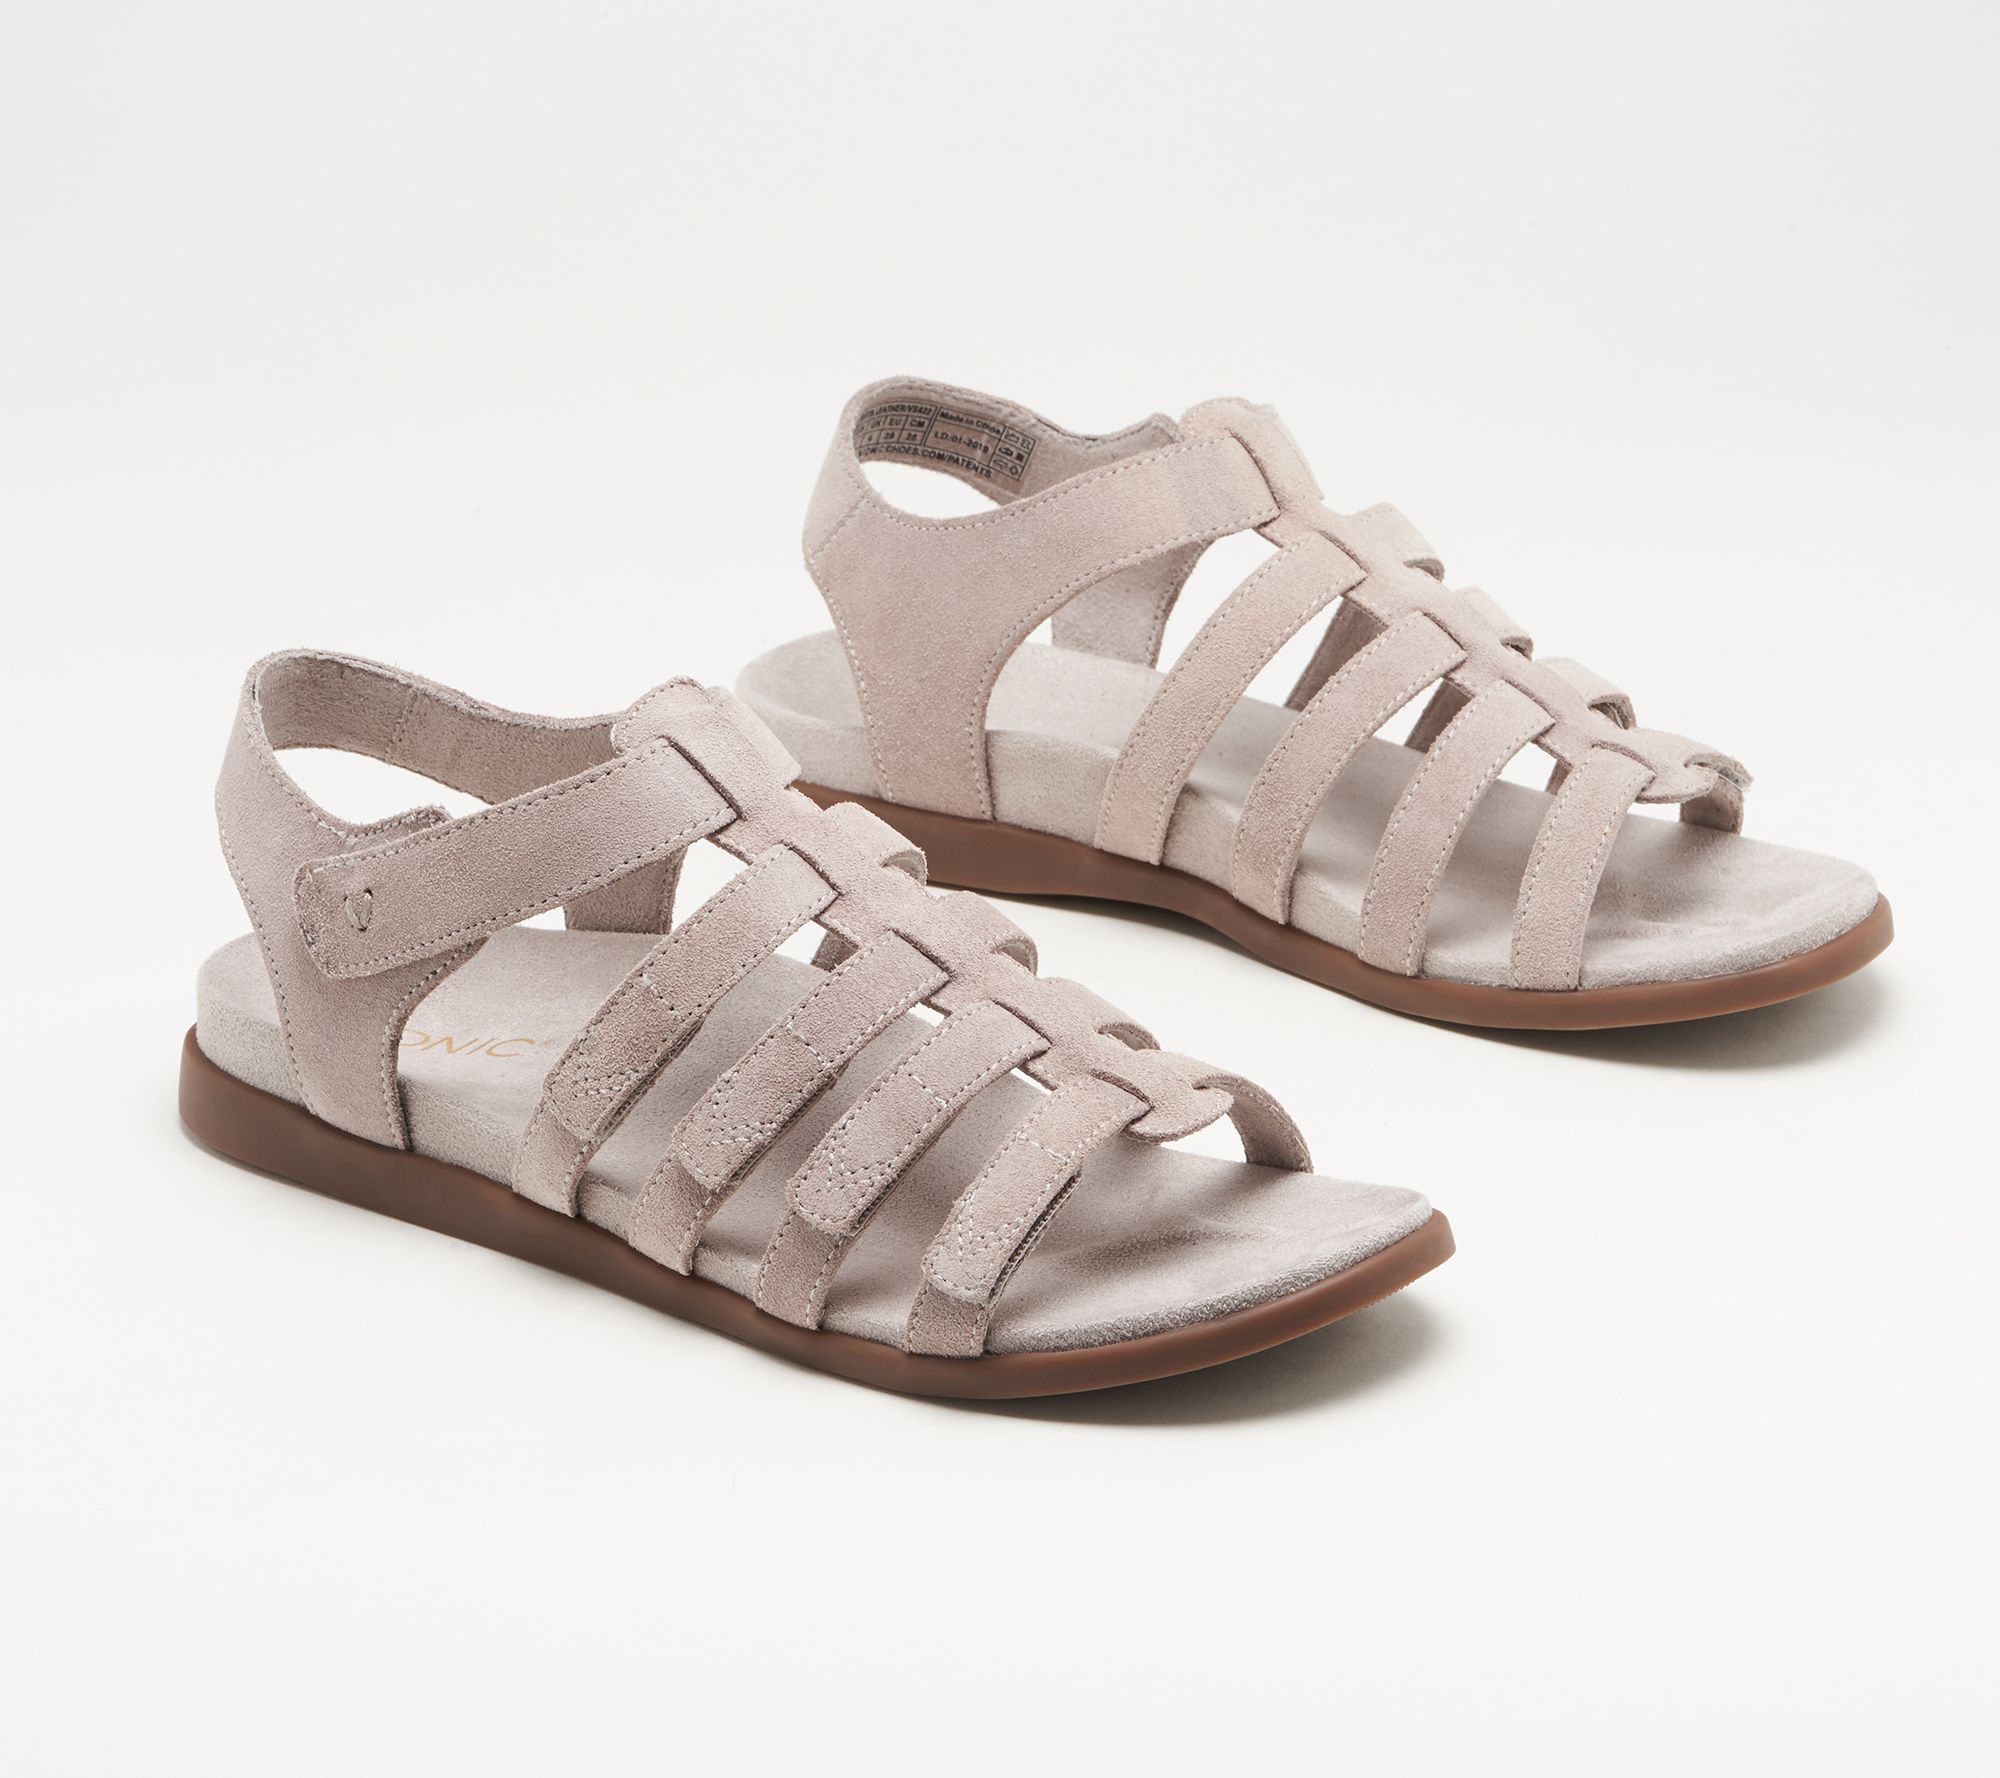 vionic gladiator sandals